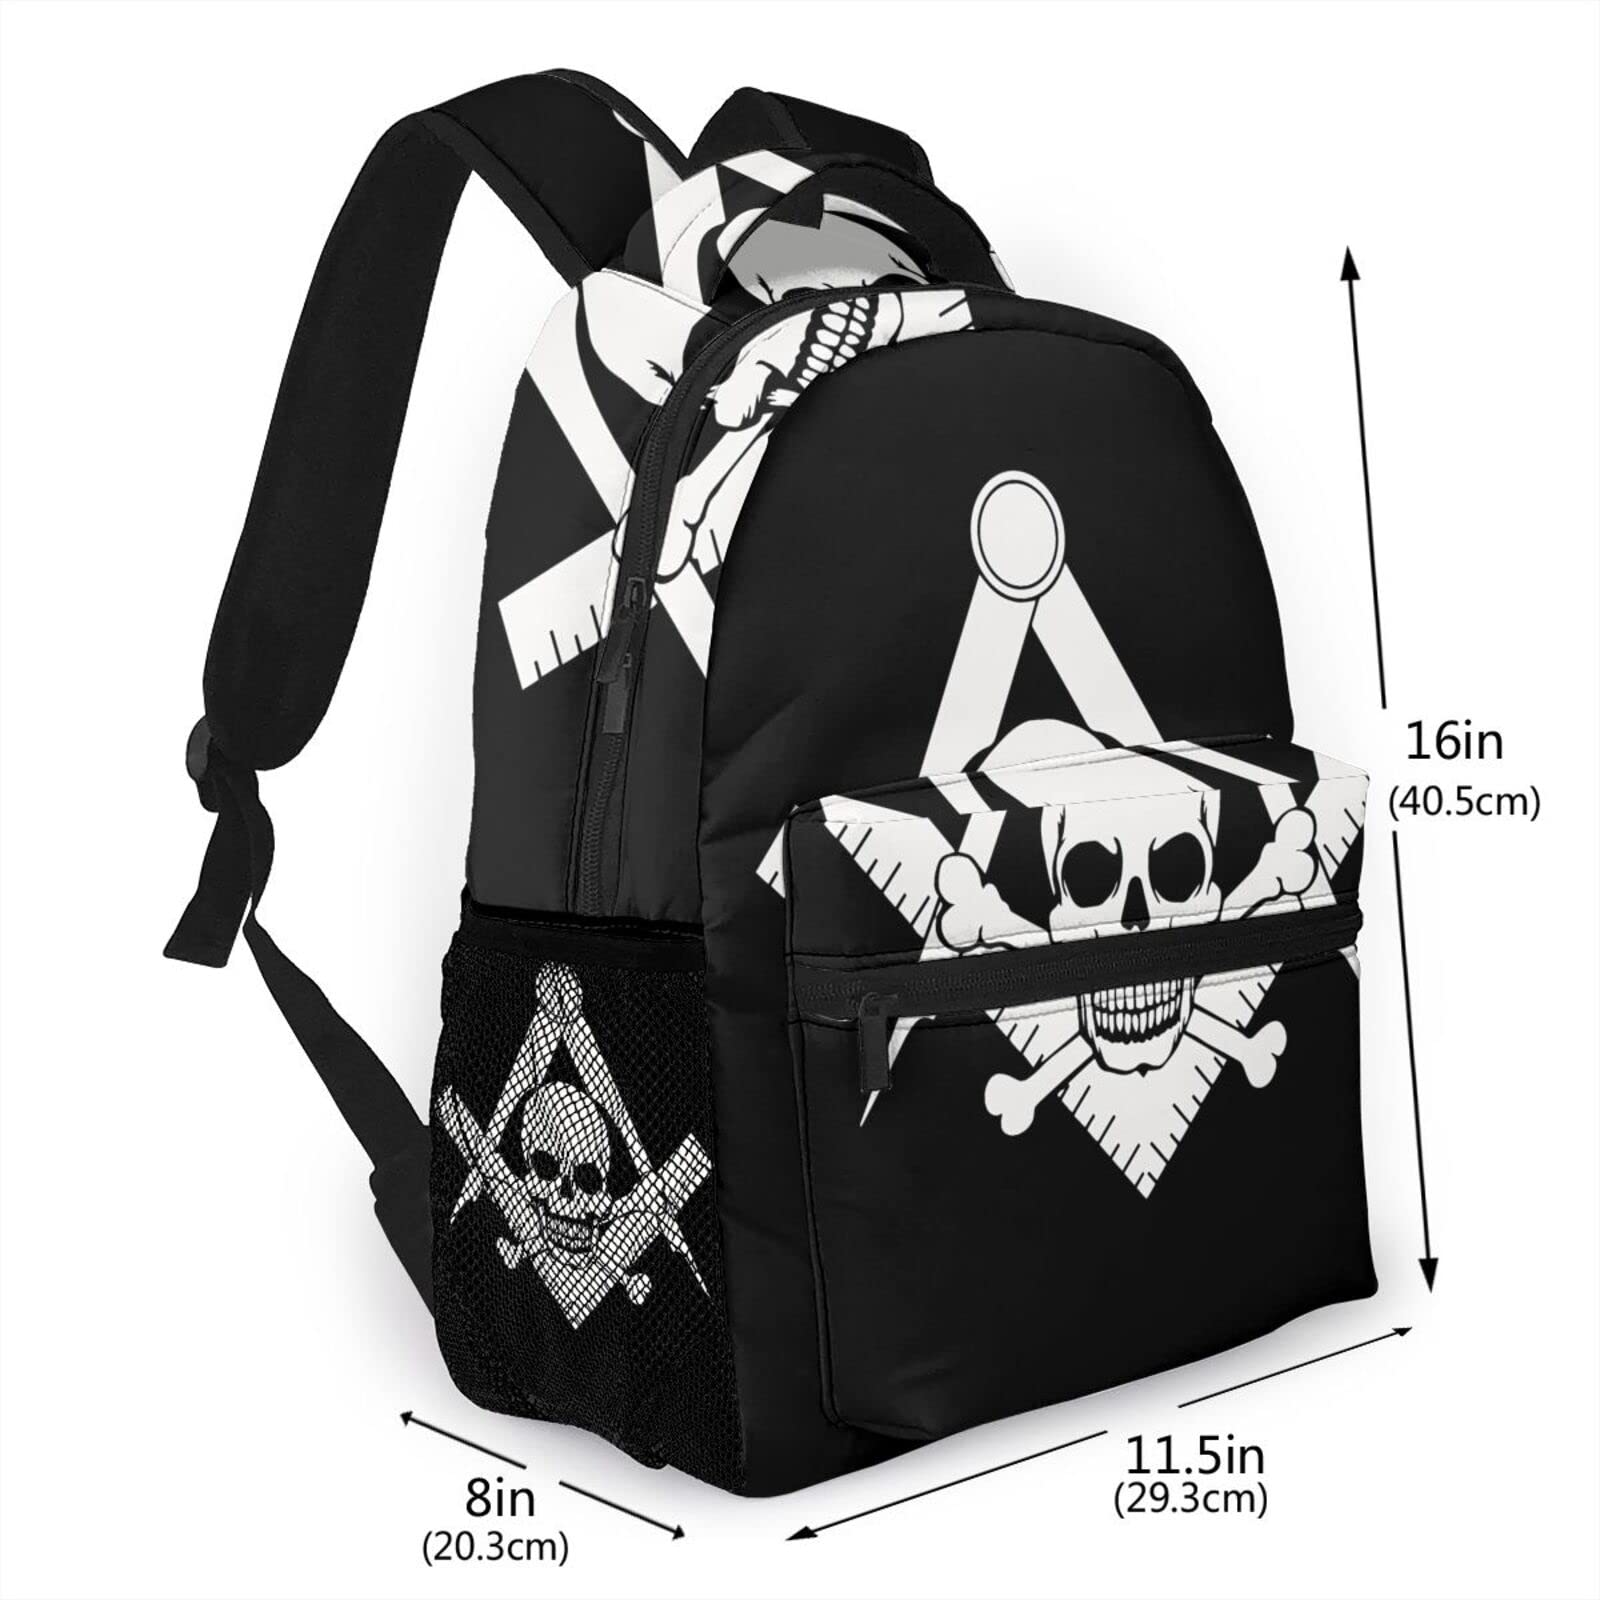 Gesey-R4T Cool Skull Freemason Logo Black Pattern Casual School Backpack Bag, Laptop Hiking Travel Shoulder Daypack College Bookbag for Men Woman Girls Boys Teens